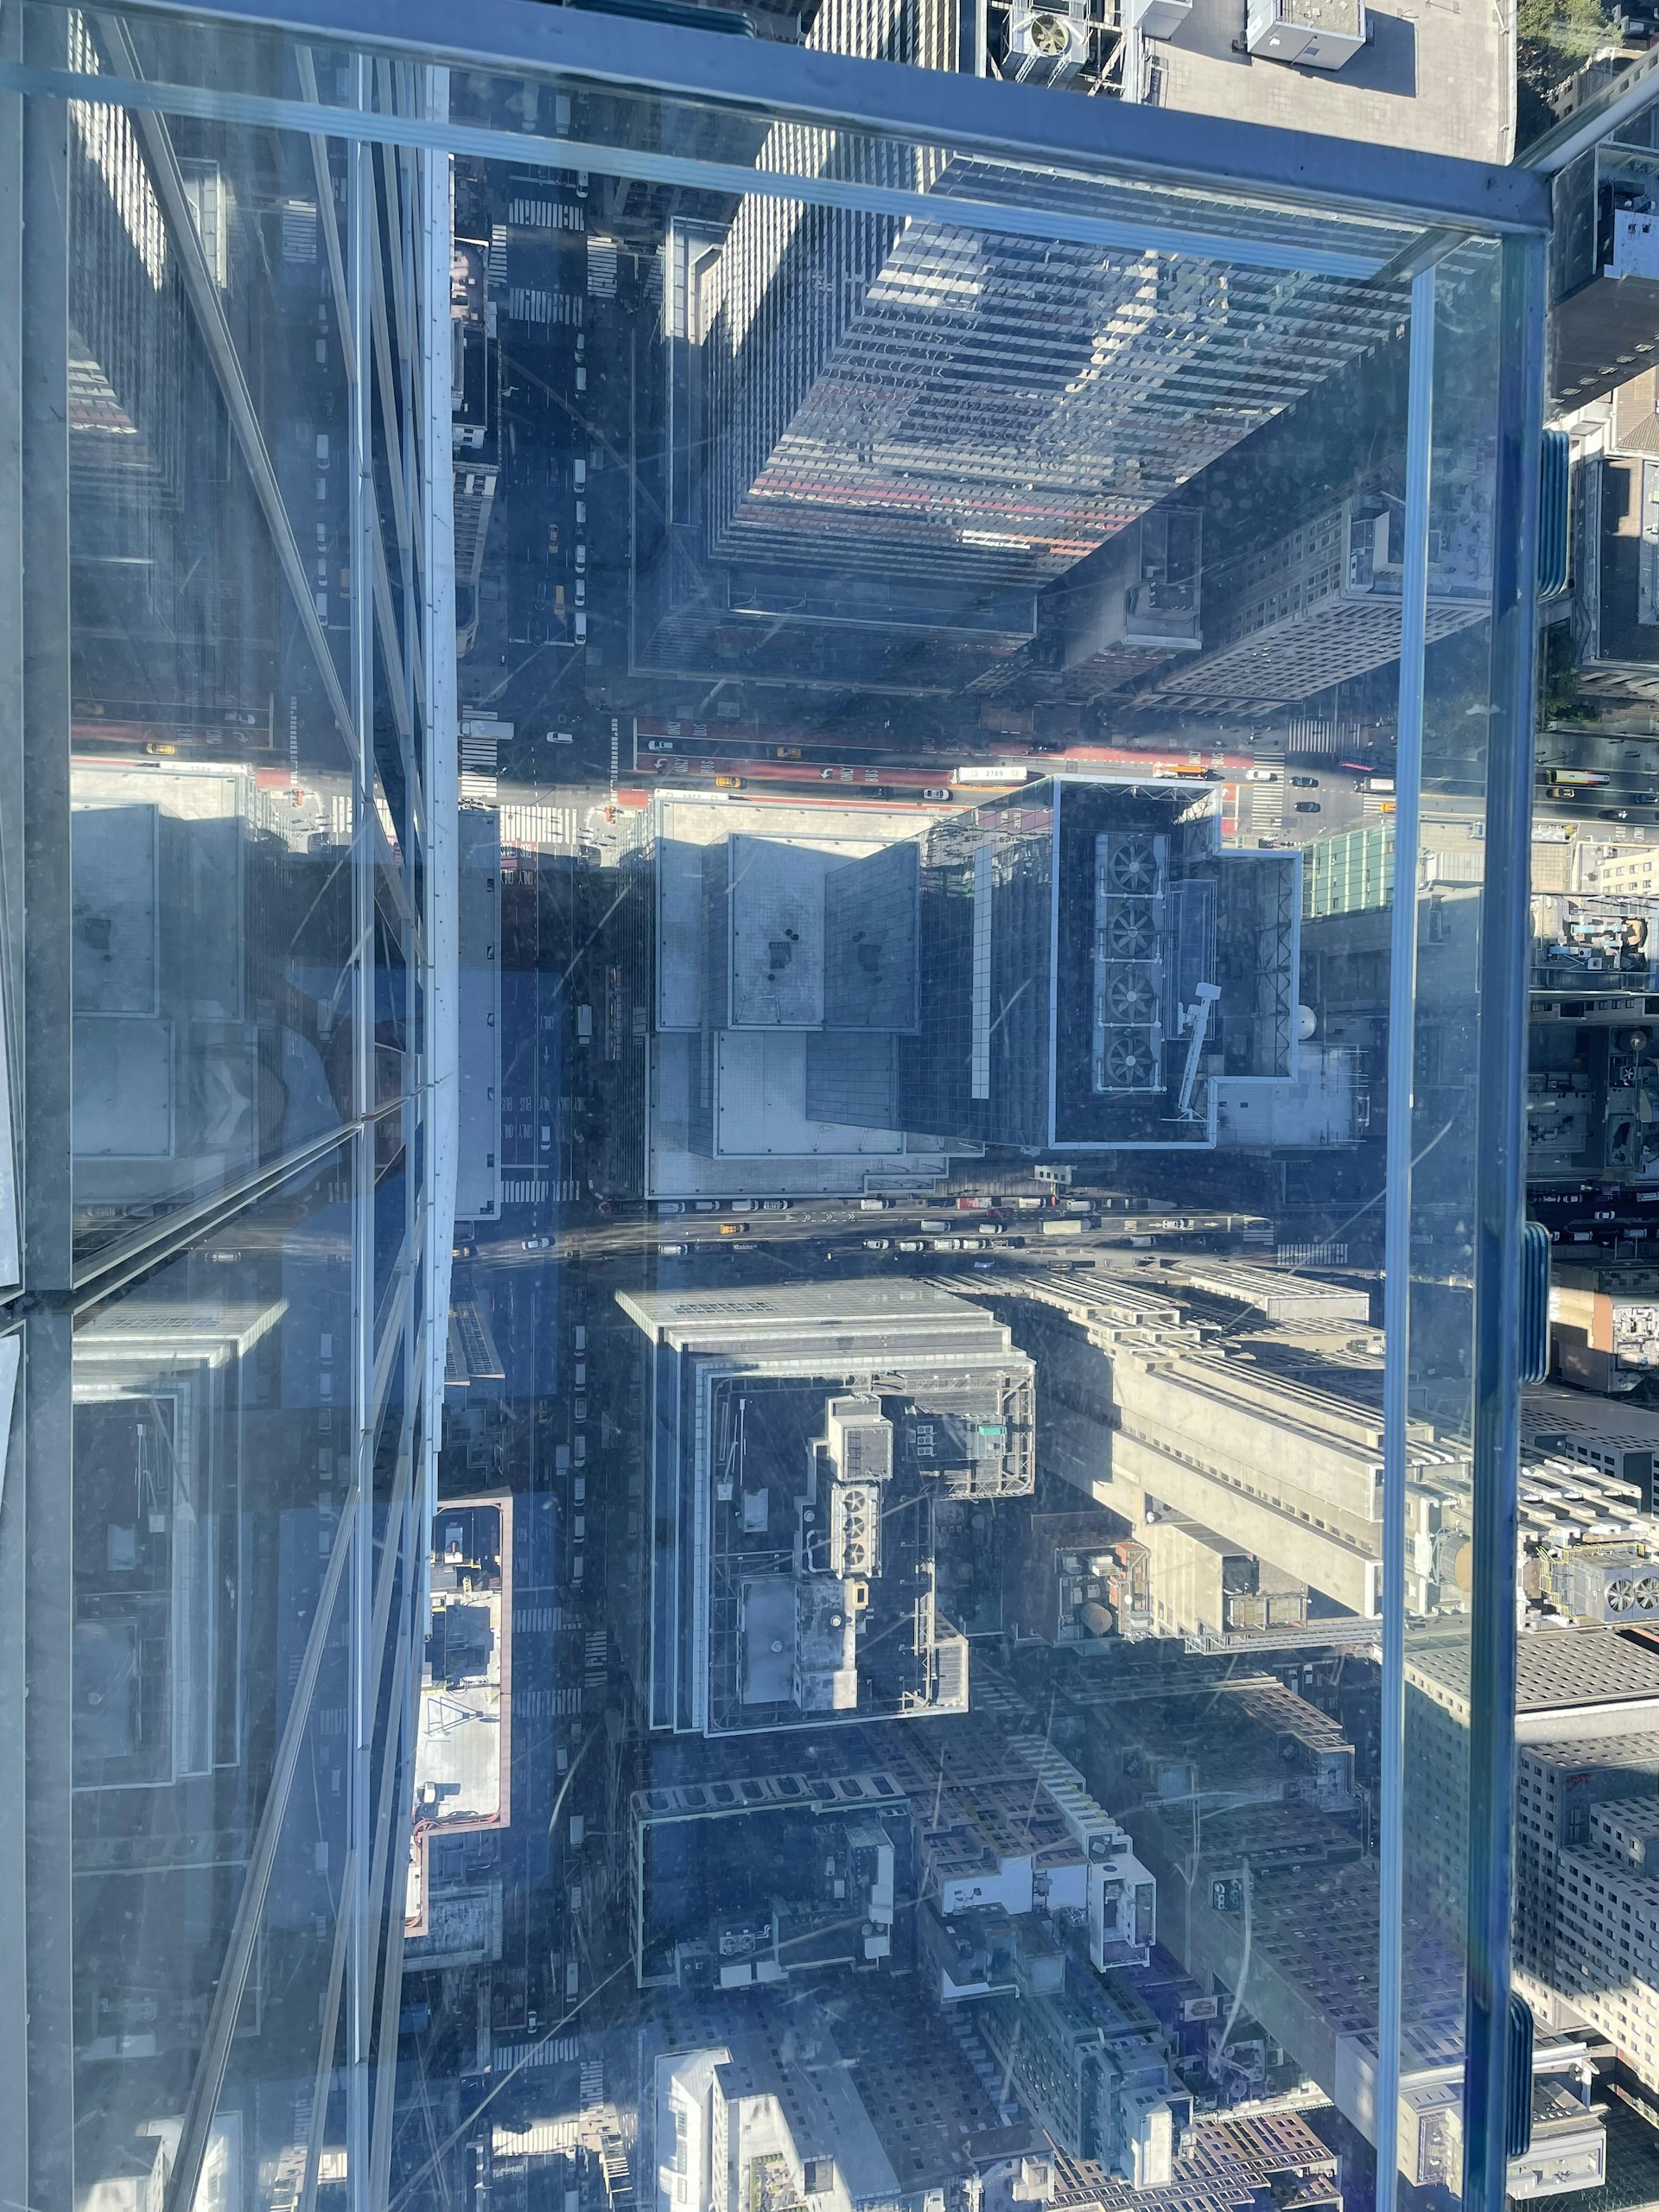 A transparent skyscraper floor overlooking a city below